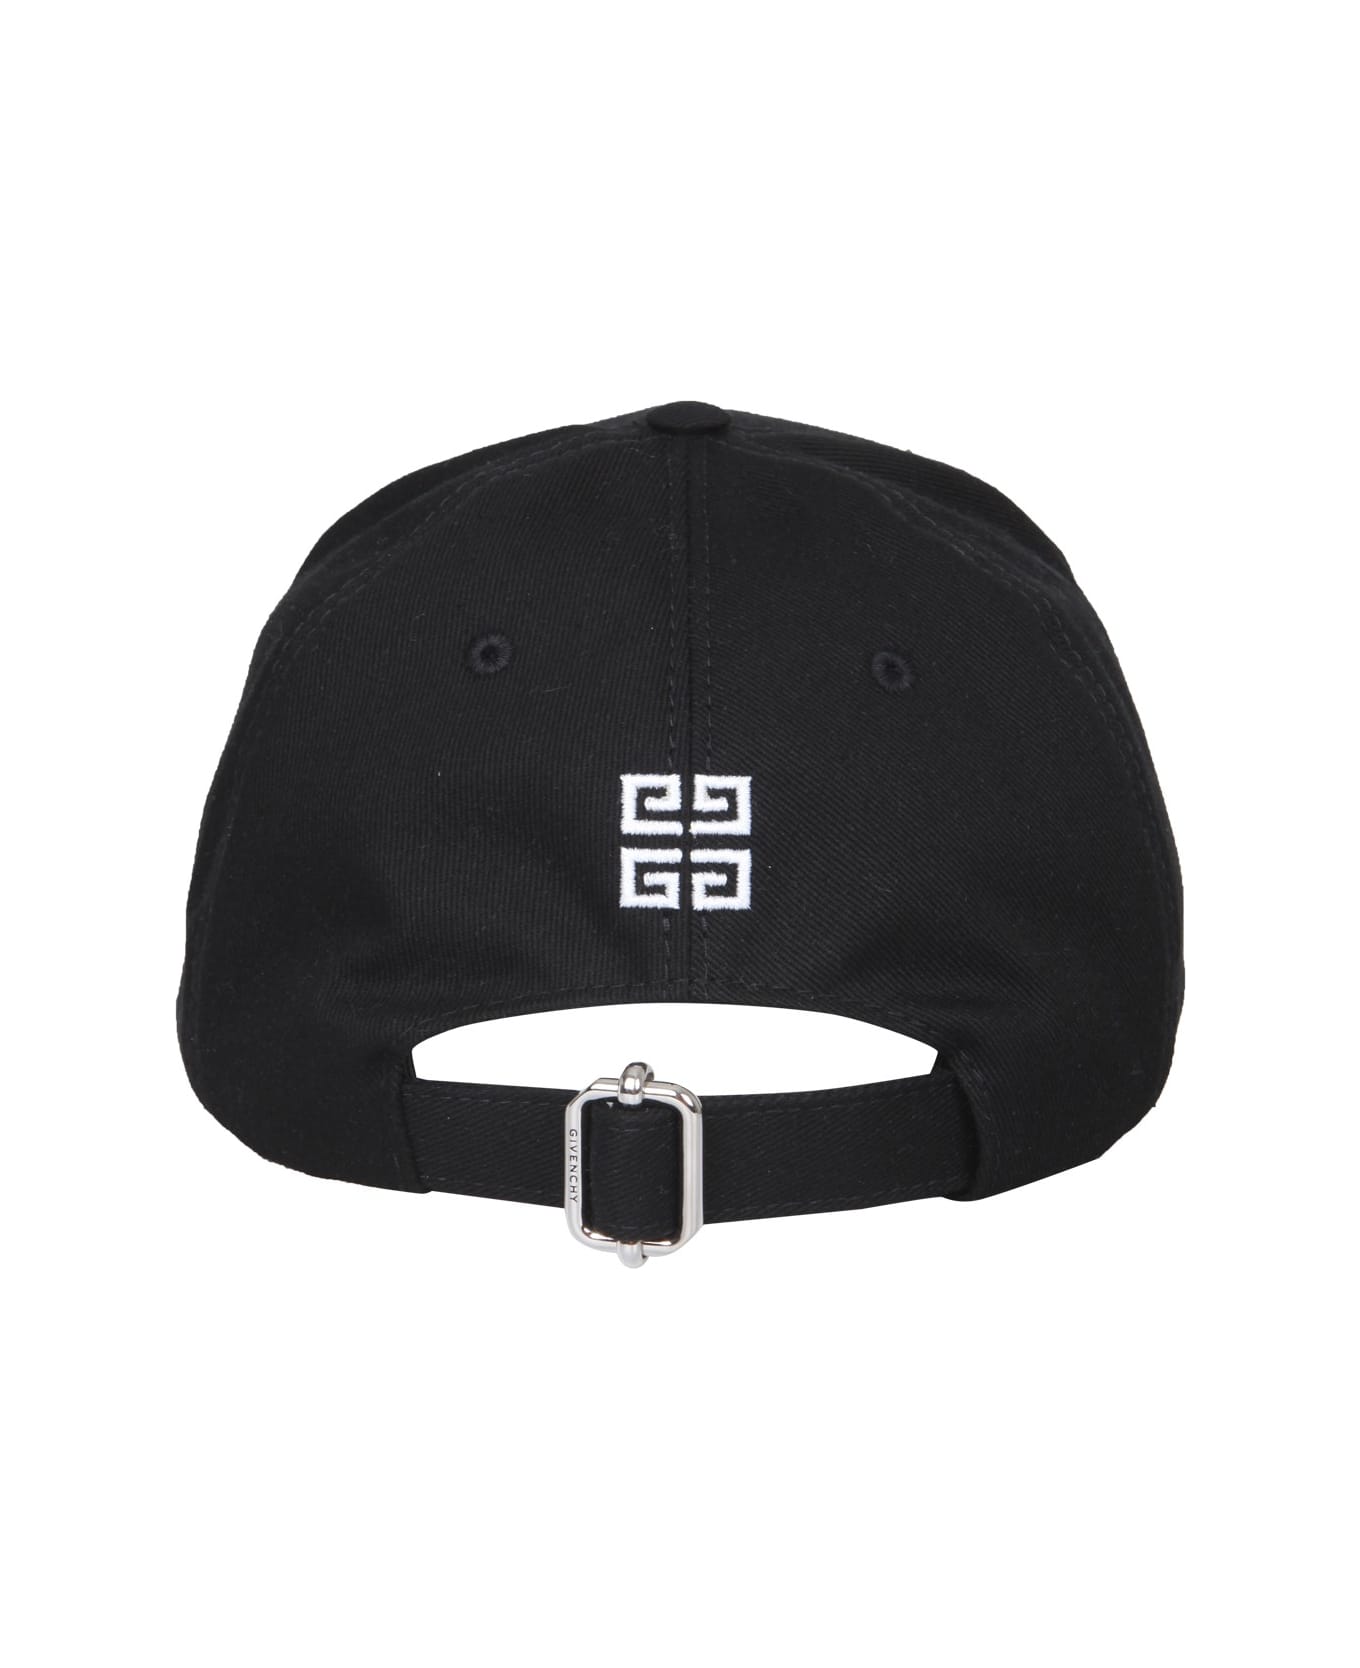 Givenchy 4g Hat - Black